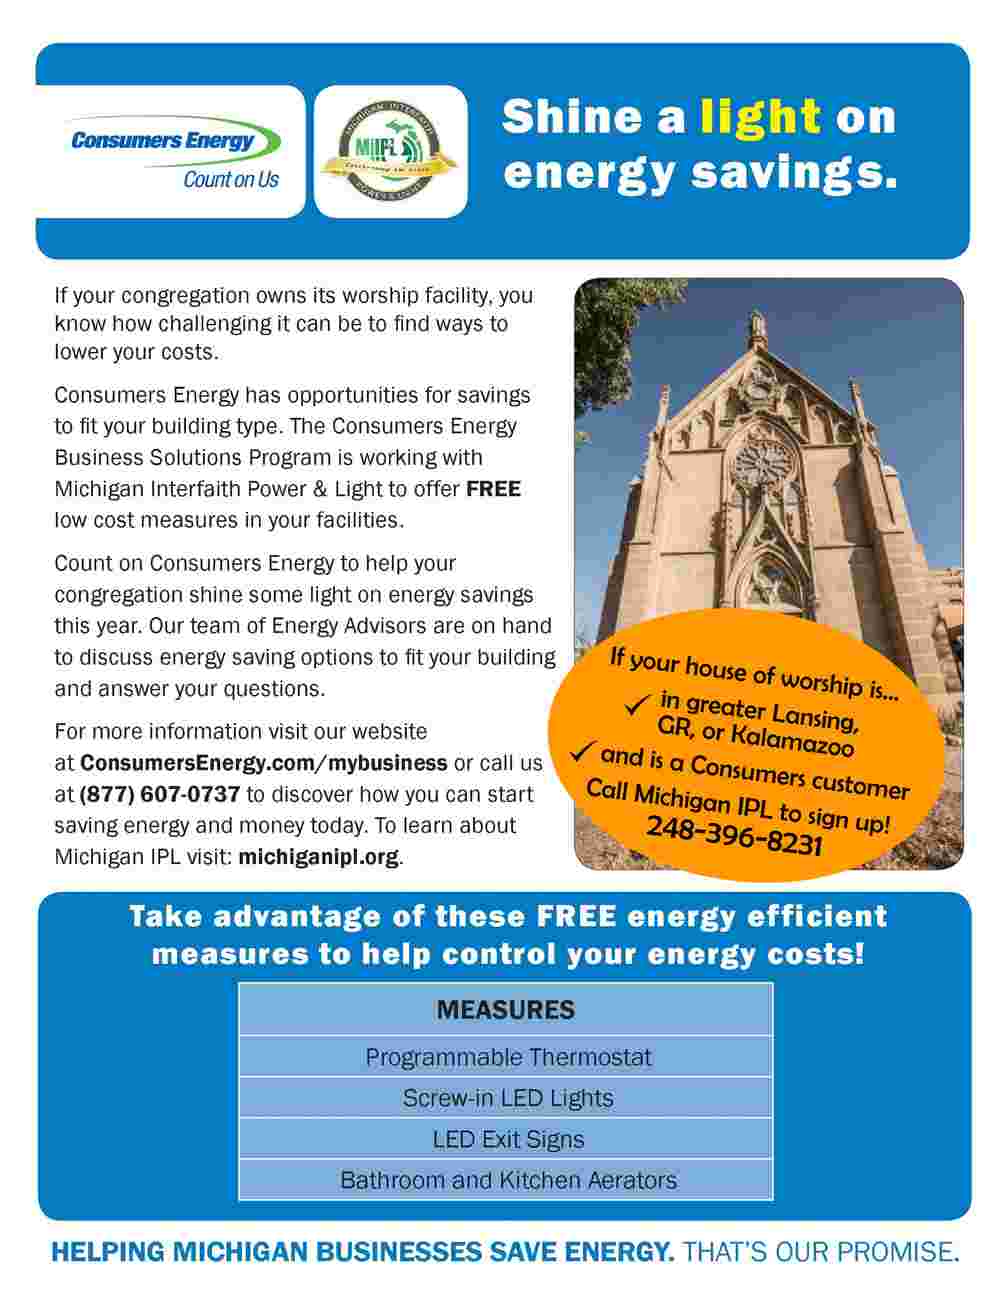 consumers-energy-efficiency-program-kaufman-in-the-news-kaufman